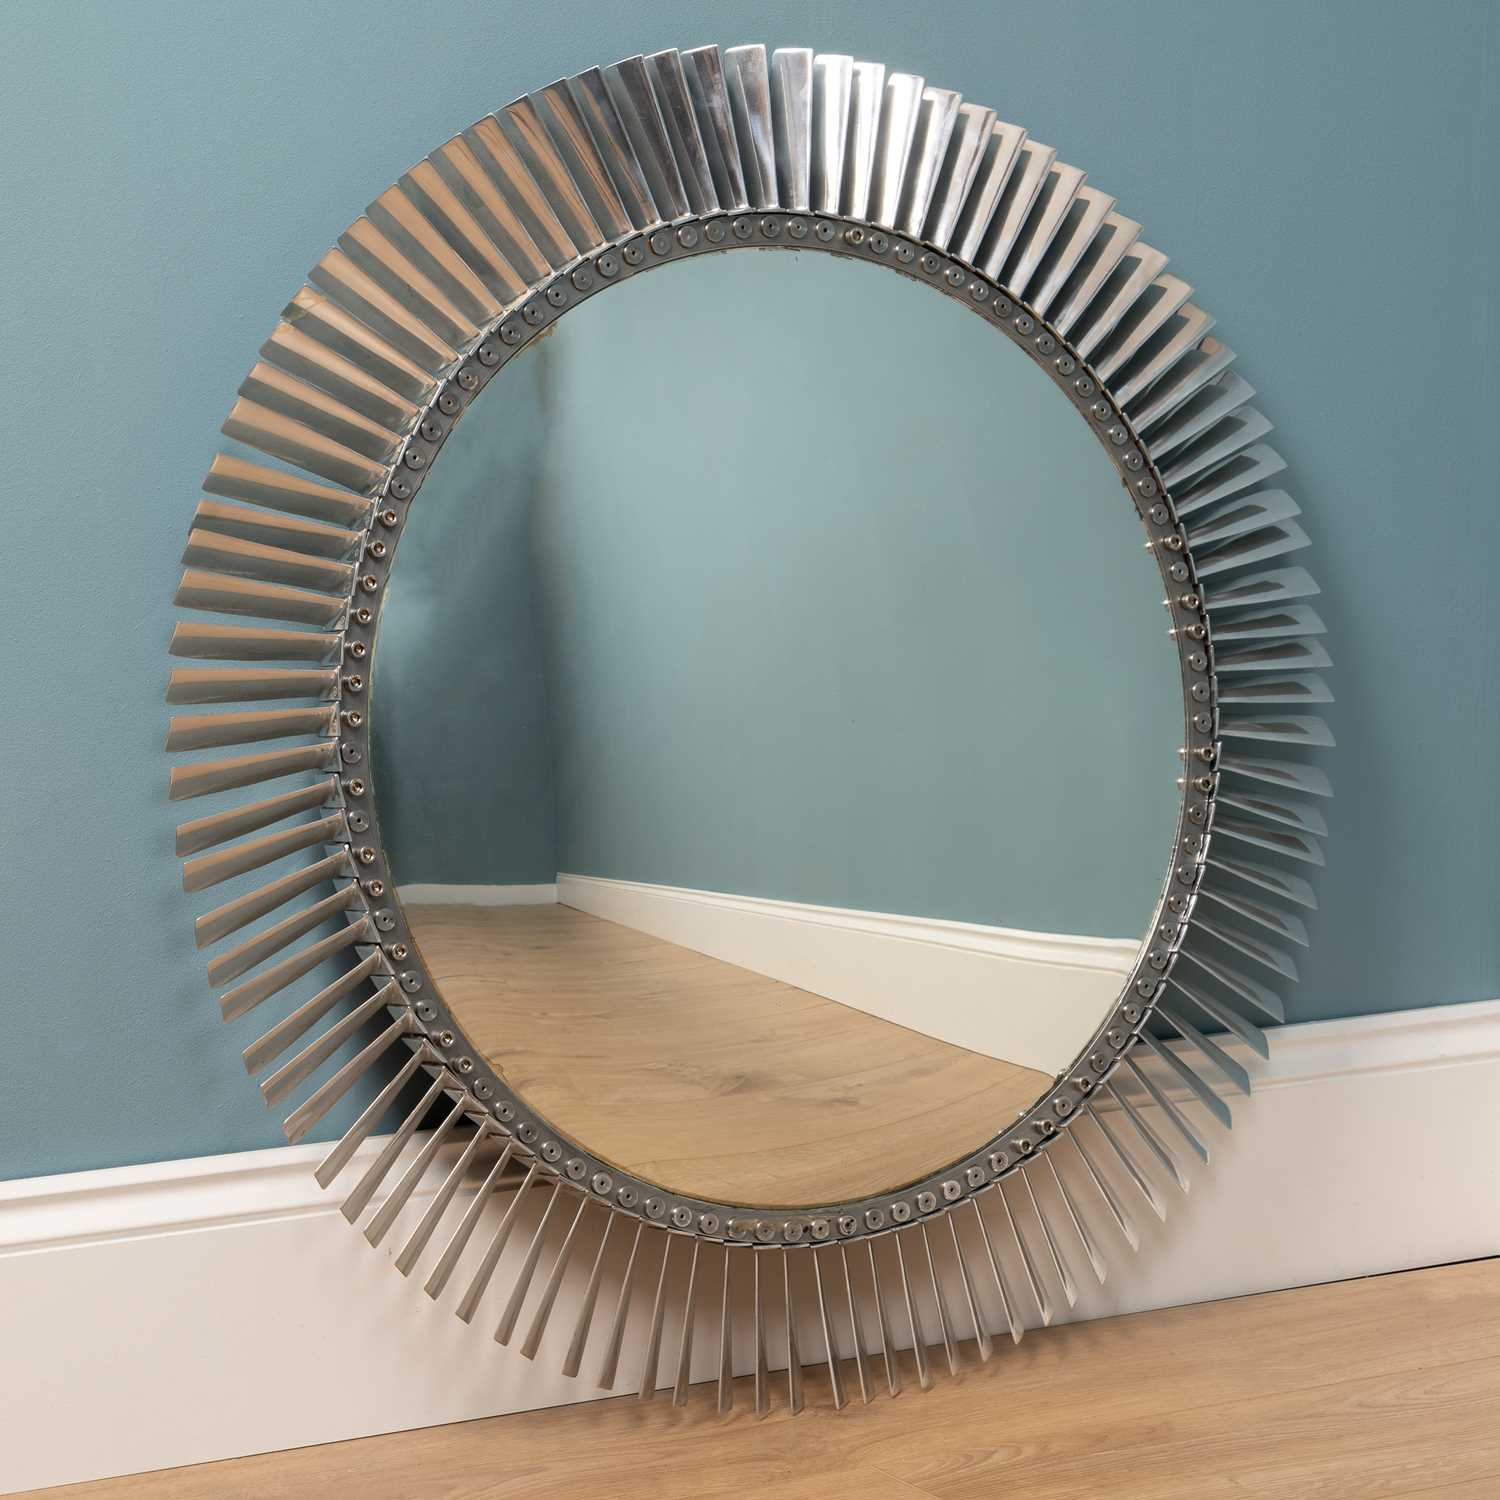 Lot 105 - A convex chrome turbine style wall mirror